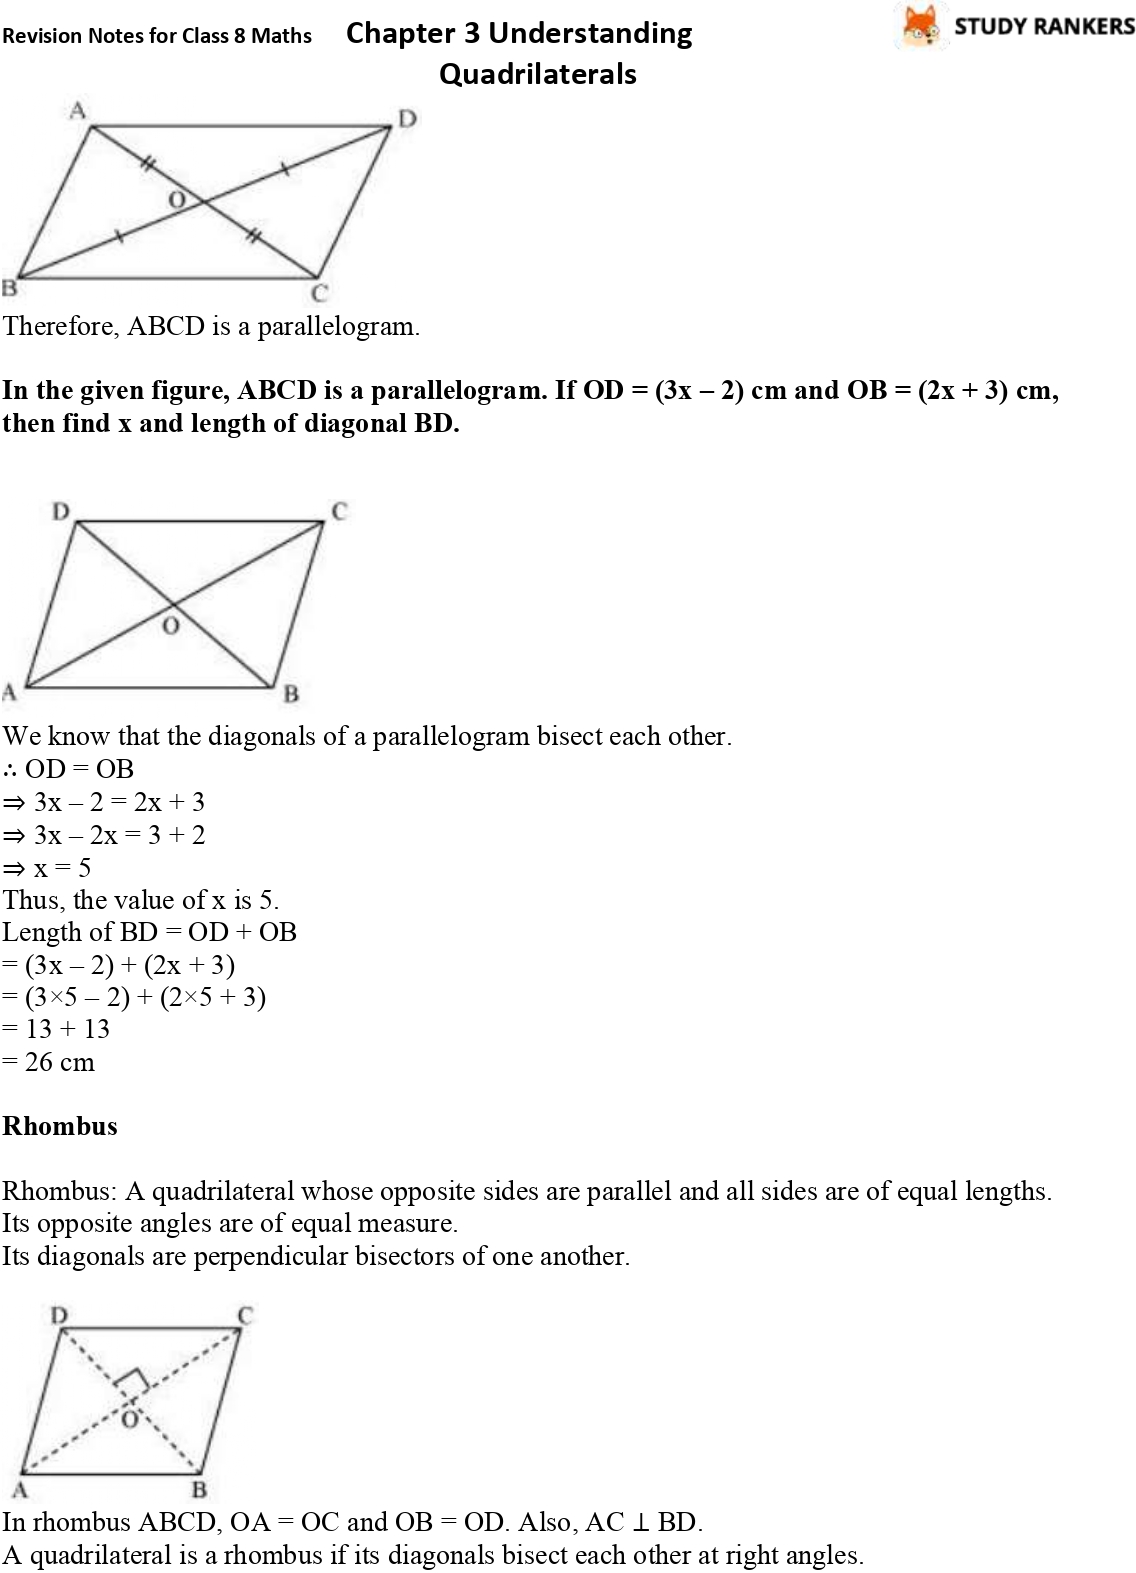 case study questions on understanding quadrilaterals class 8